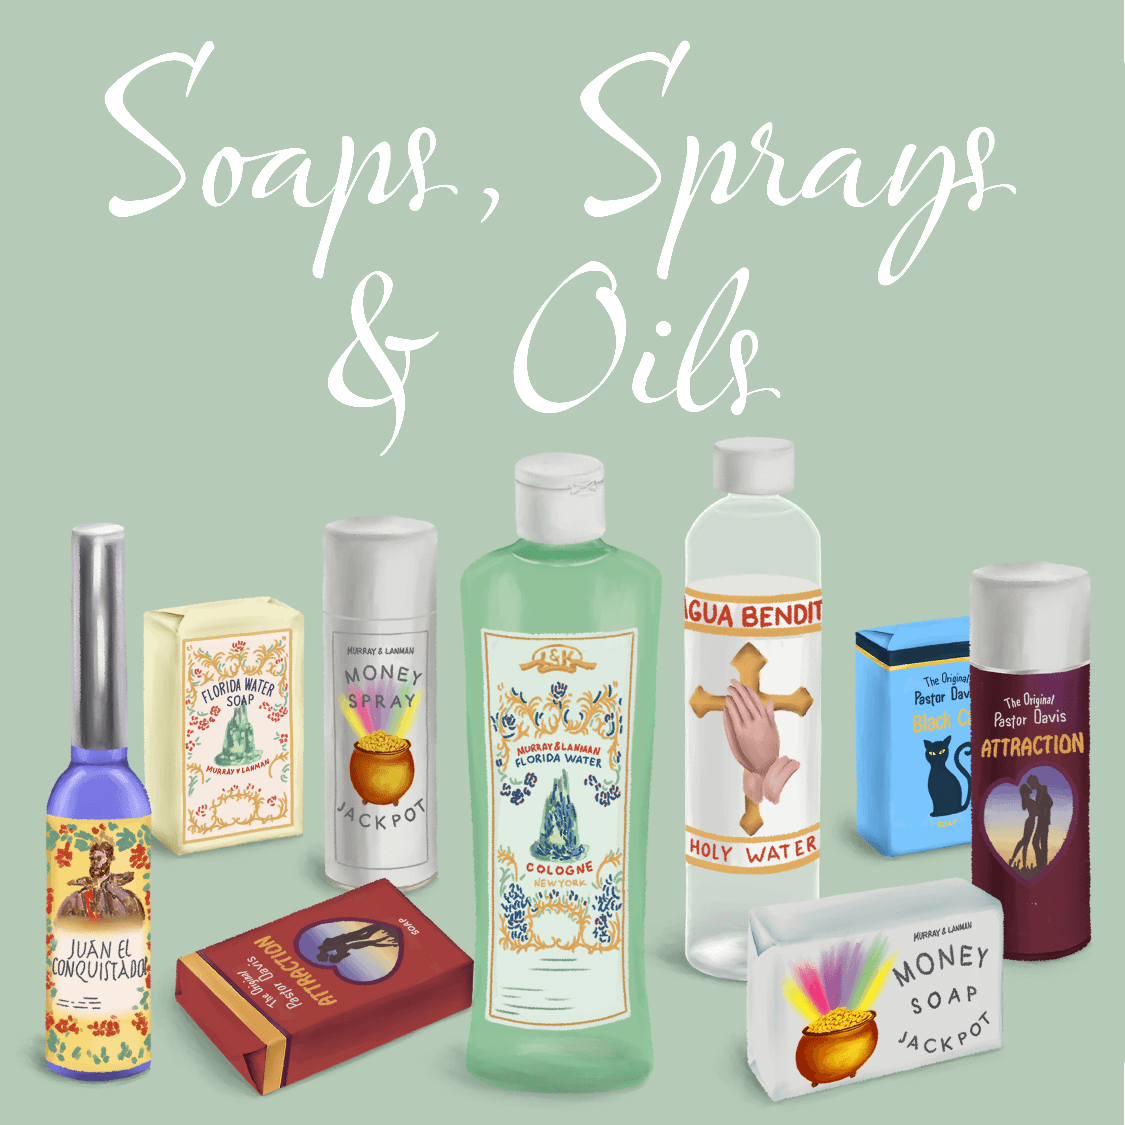 Soaps, Sprays & Oils